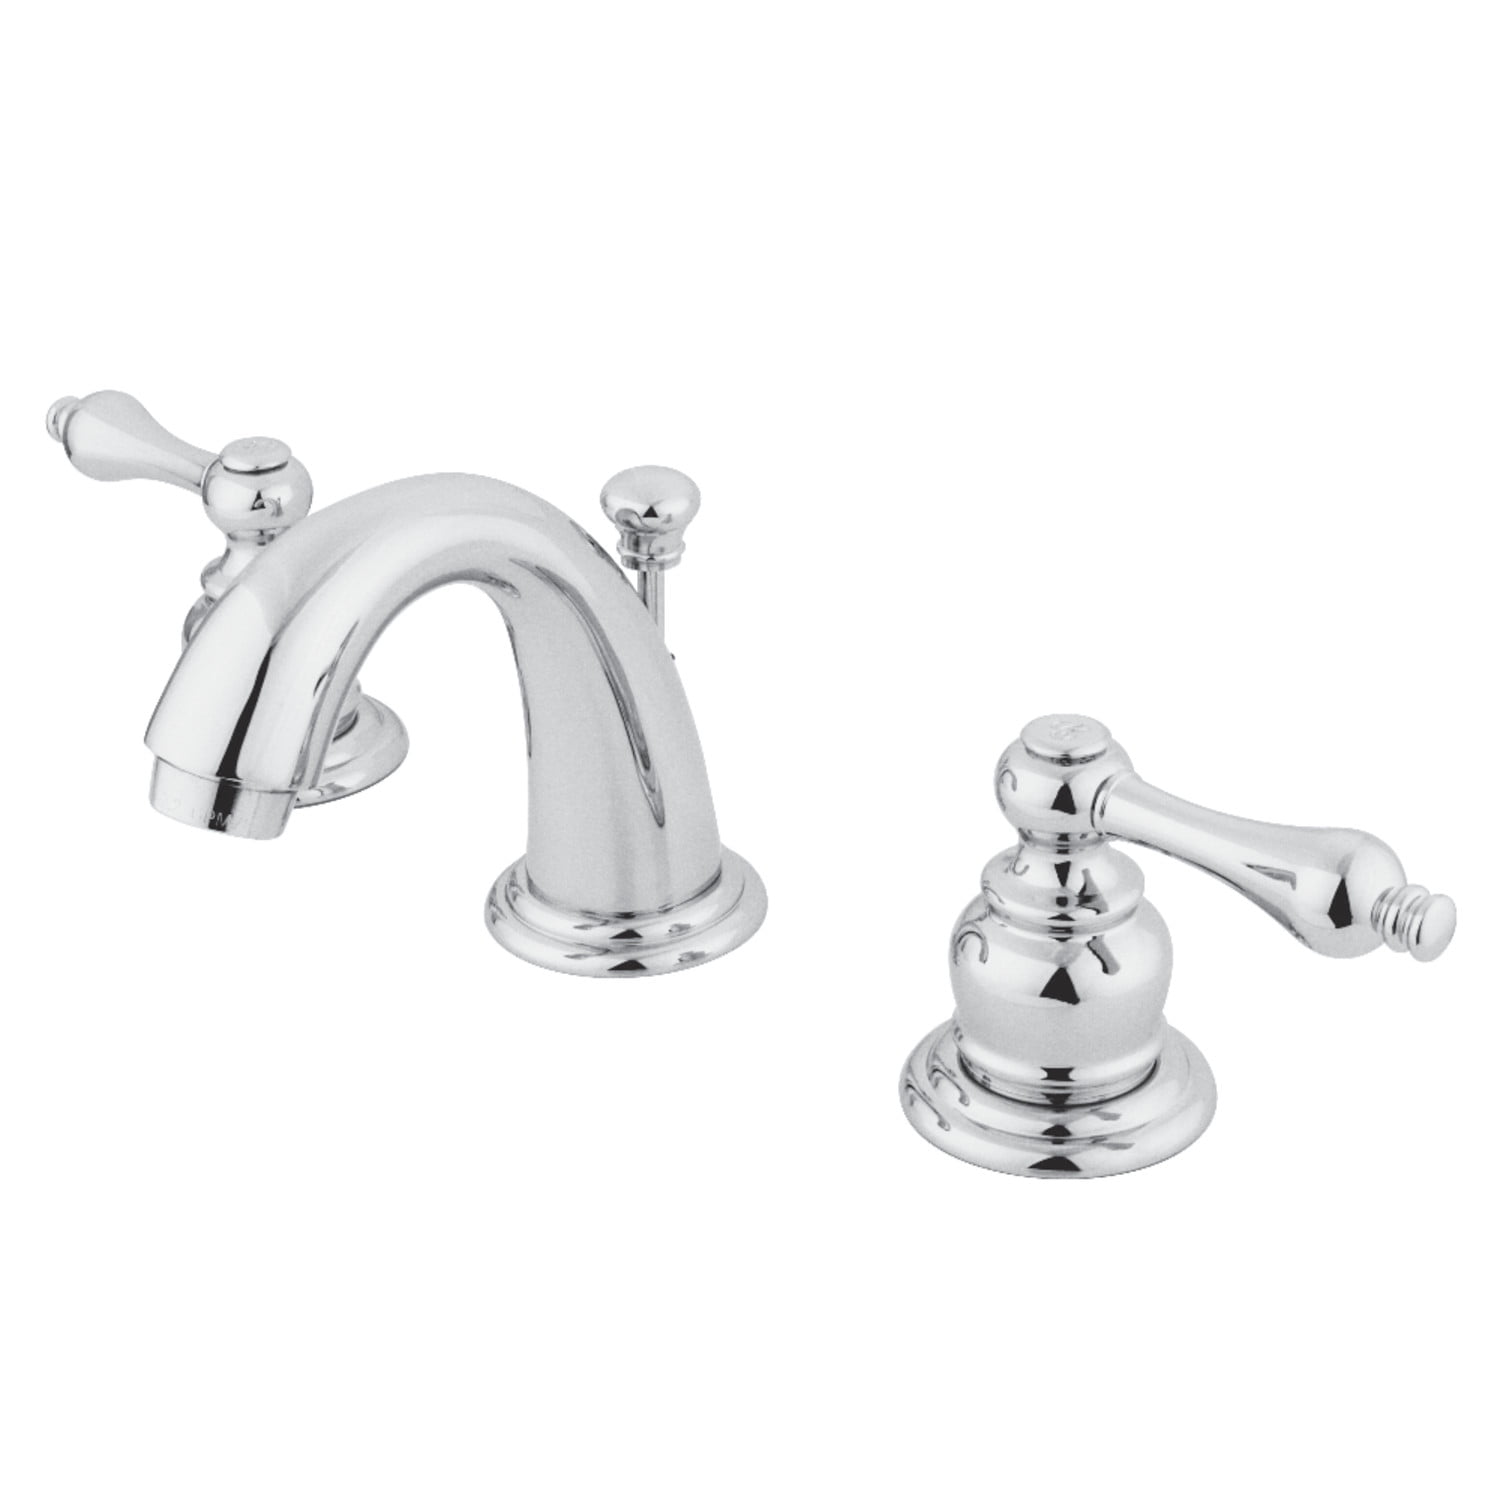 Kingston Brass GKB964 Widespread Bathroom Faucet, Polished Chrome 